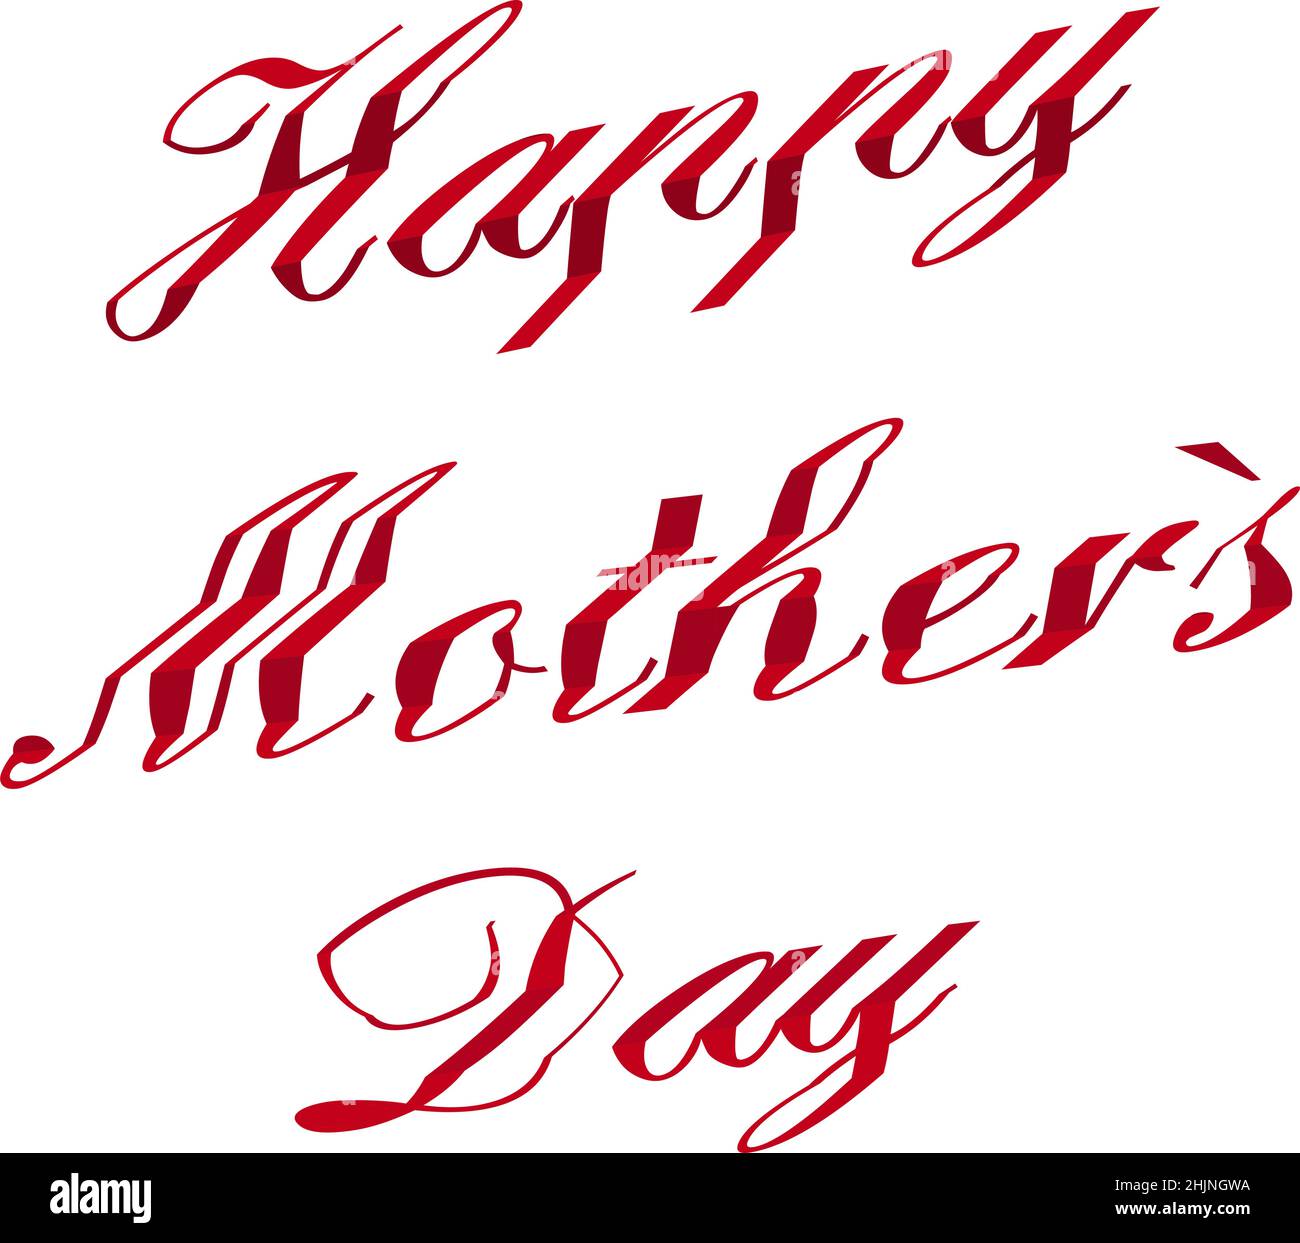 Happy Mothers Day 3D Würfel Schriftstil Vektor Illustration. Rote elegante Poster Kalligraphie Text Worte Happy Mothers Day. Dekorationsbuchstaben. Stock Vektor